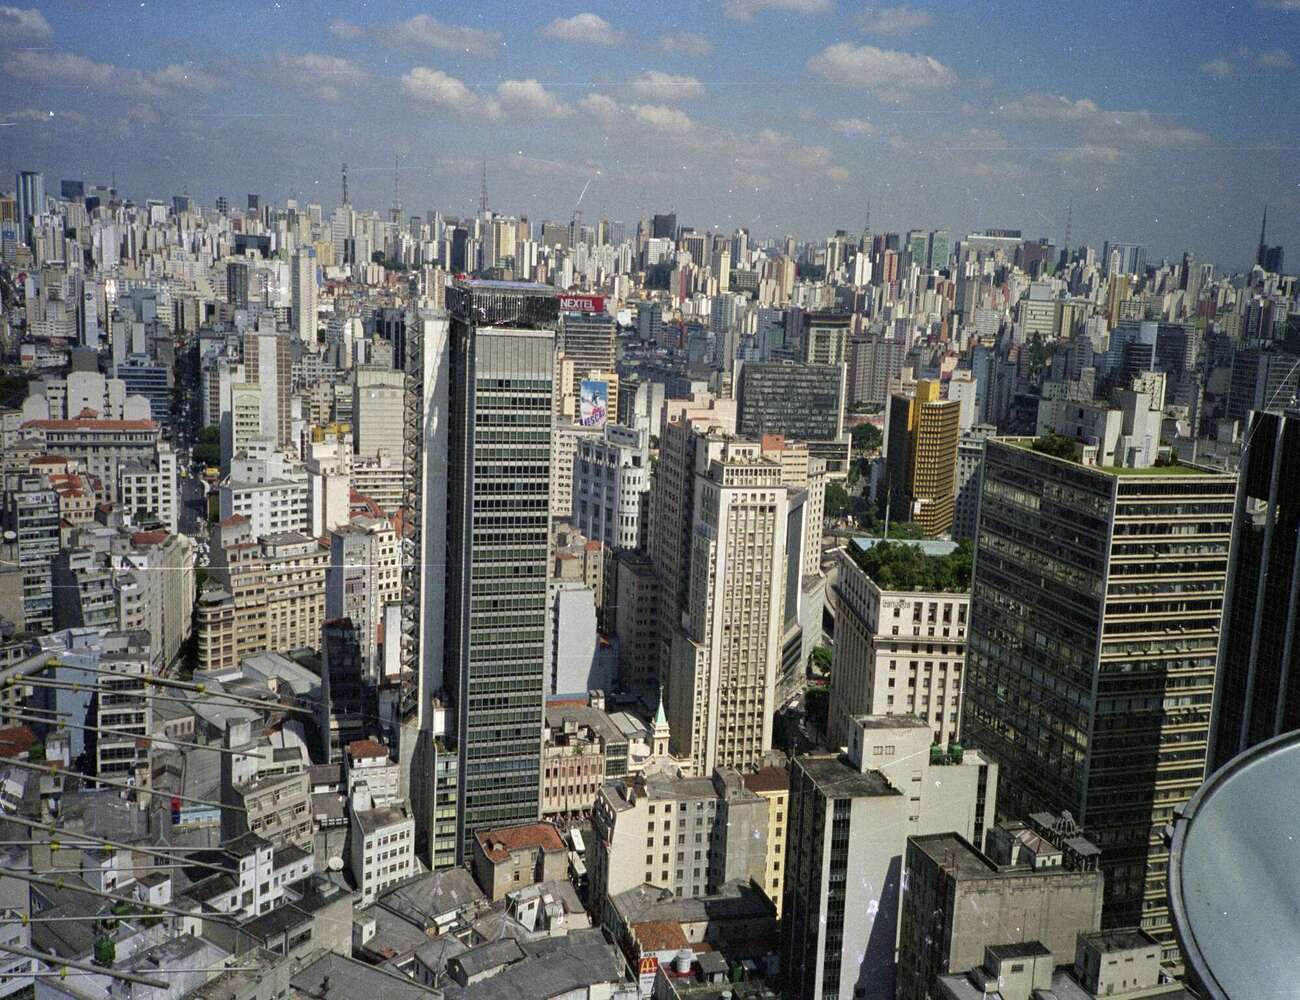  São Paulo, Brasilien